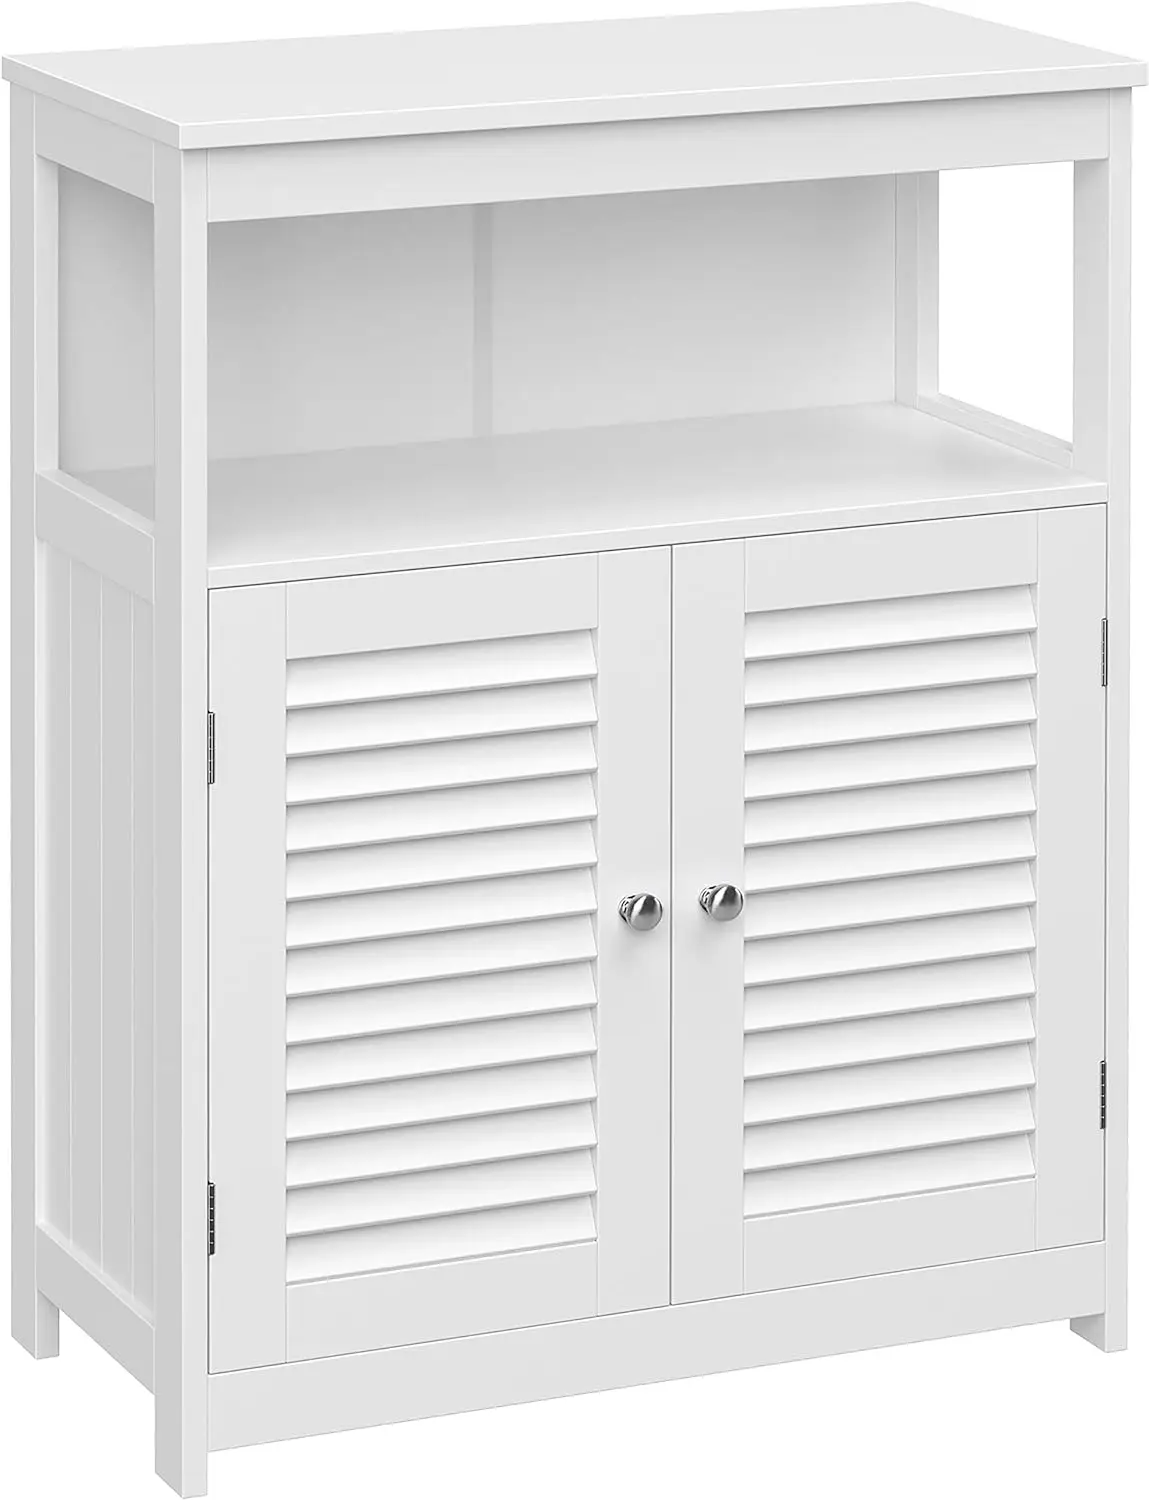 Bathroom Floor Storage Cabinet, Bathroom Storage Unit with 2 Adjustable  Shelves, Bathroom Cabinet Freestanding - AliExpress